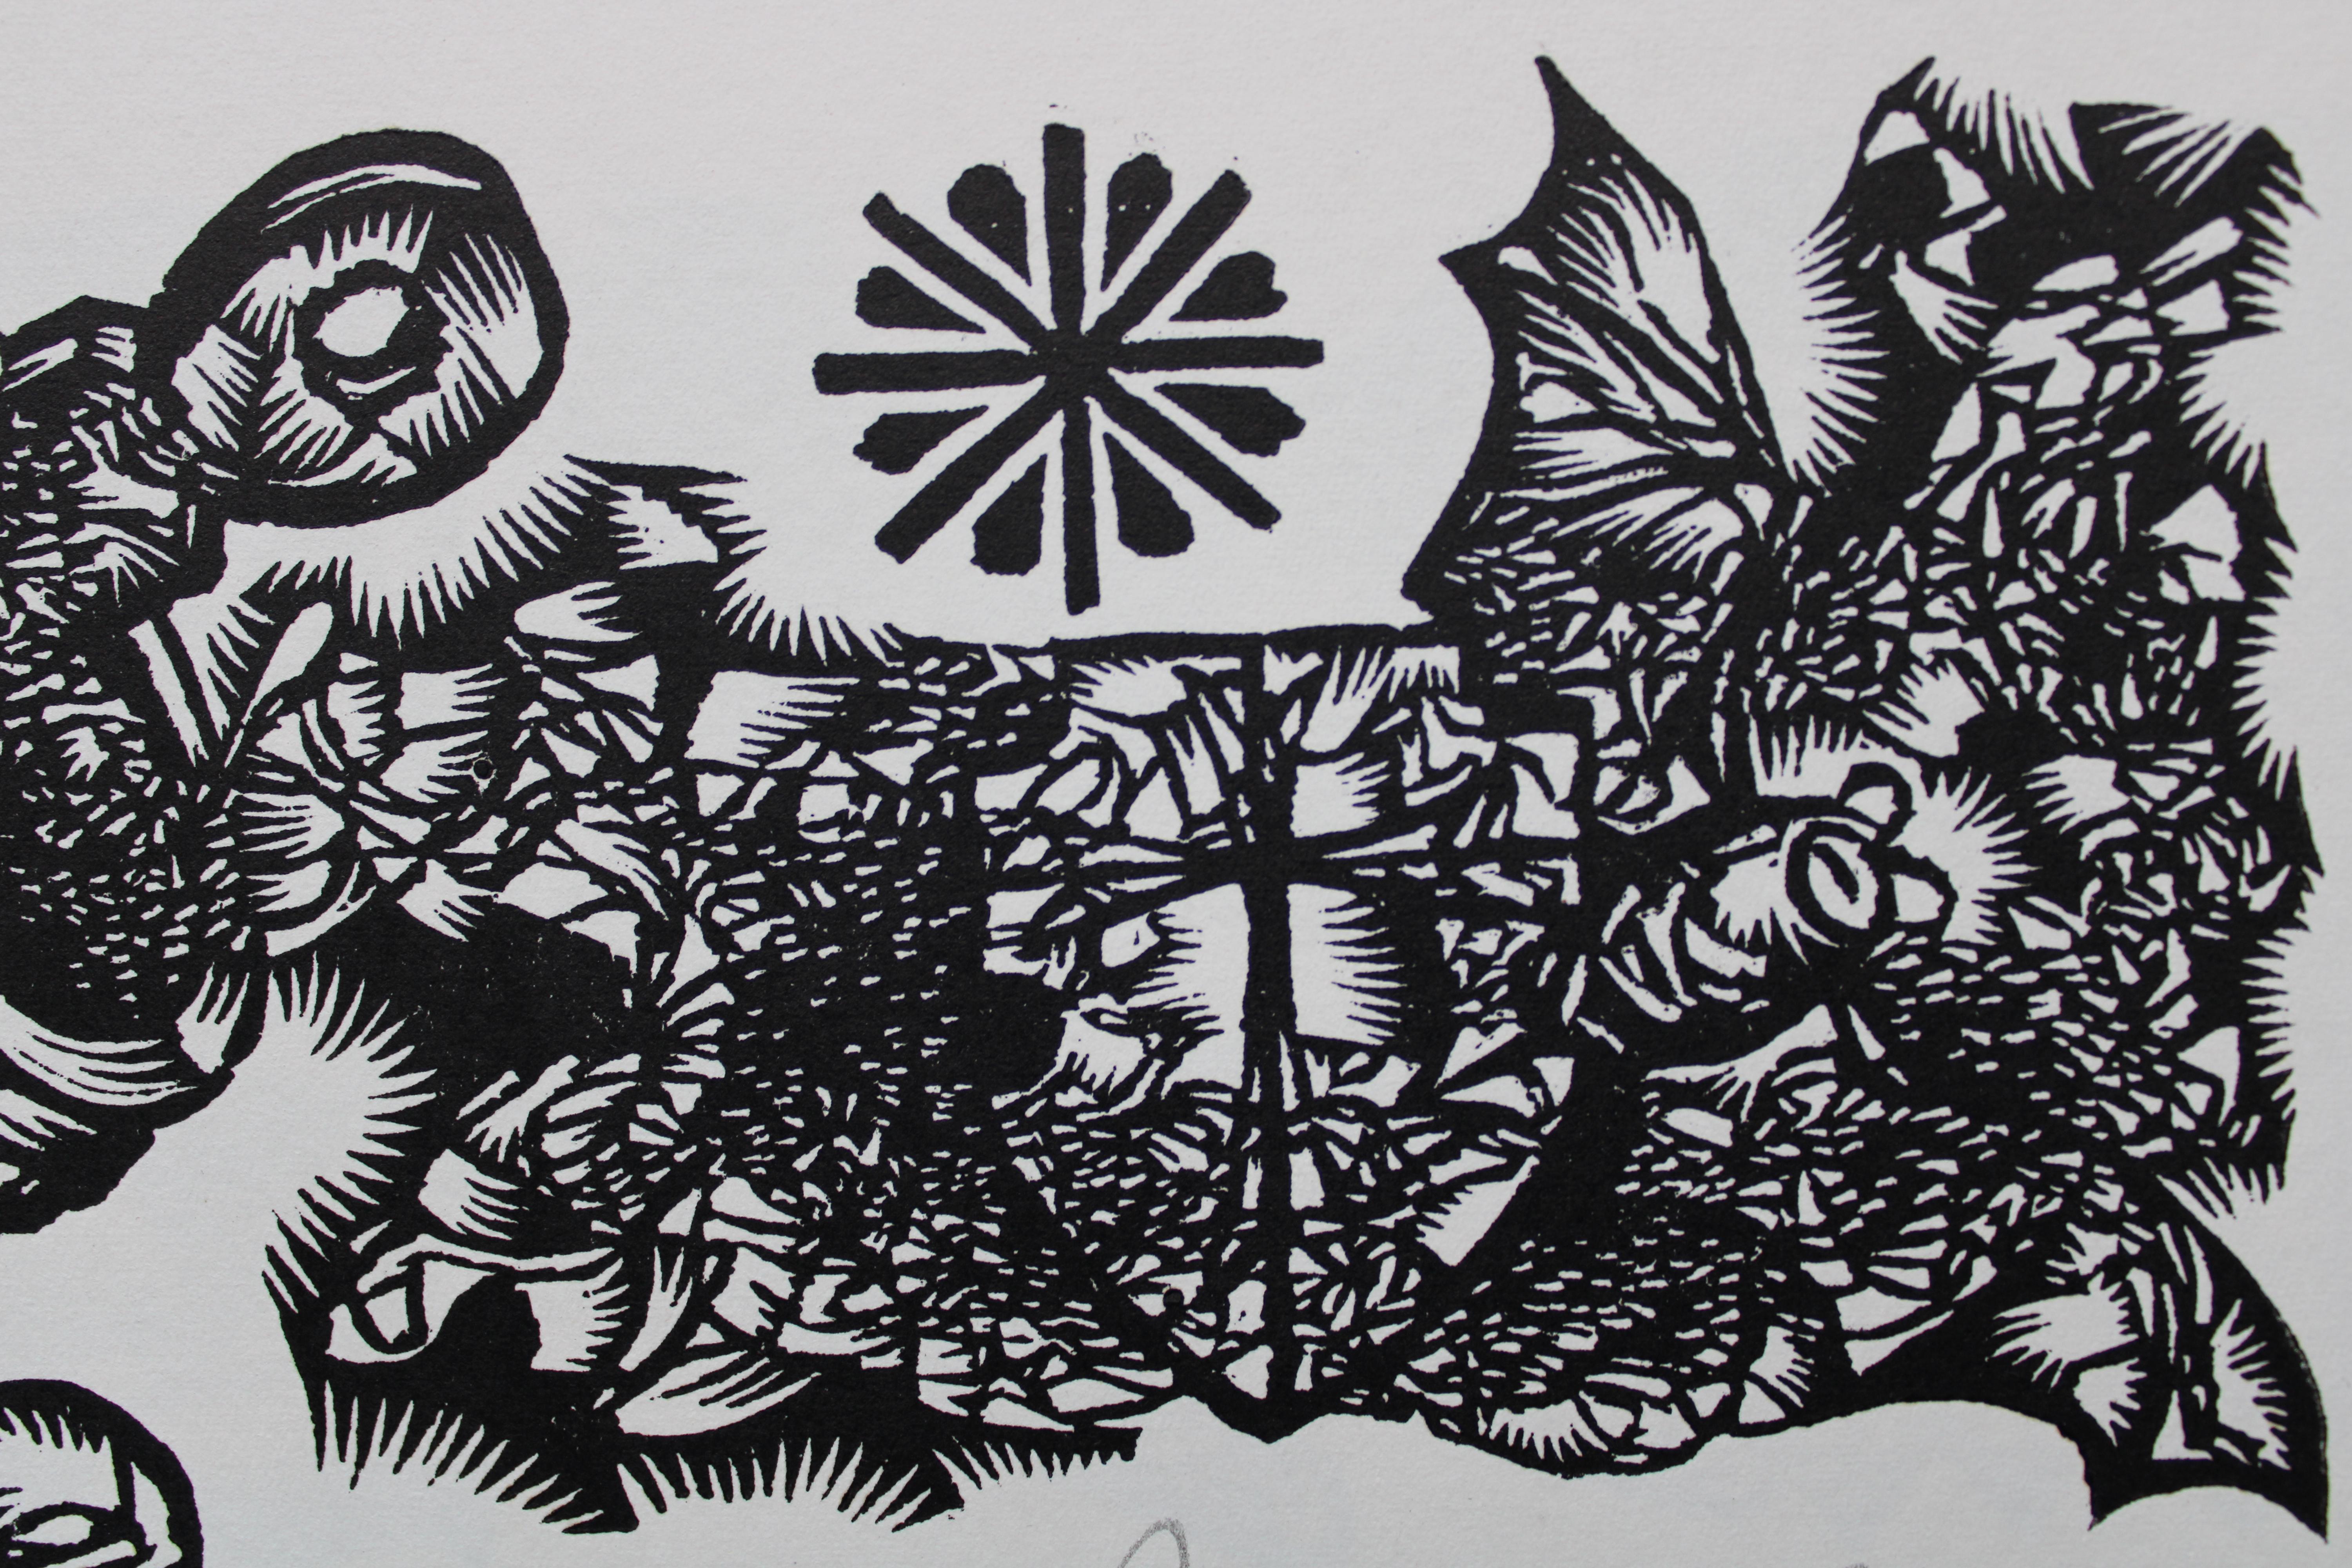 Barrel. 1982. Papier, Linolschnitt, 20x34 cm (Volkskunst), Print, von Dainis Rozkalns